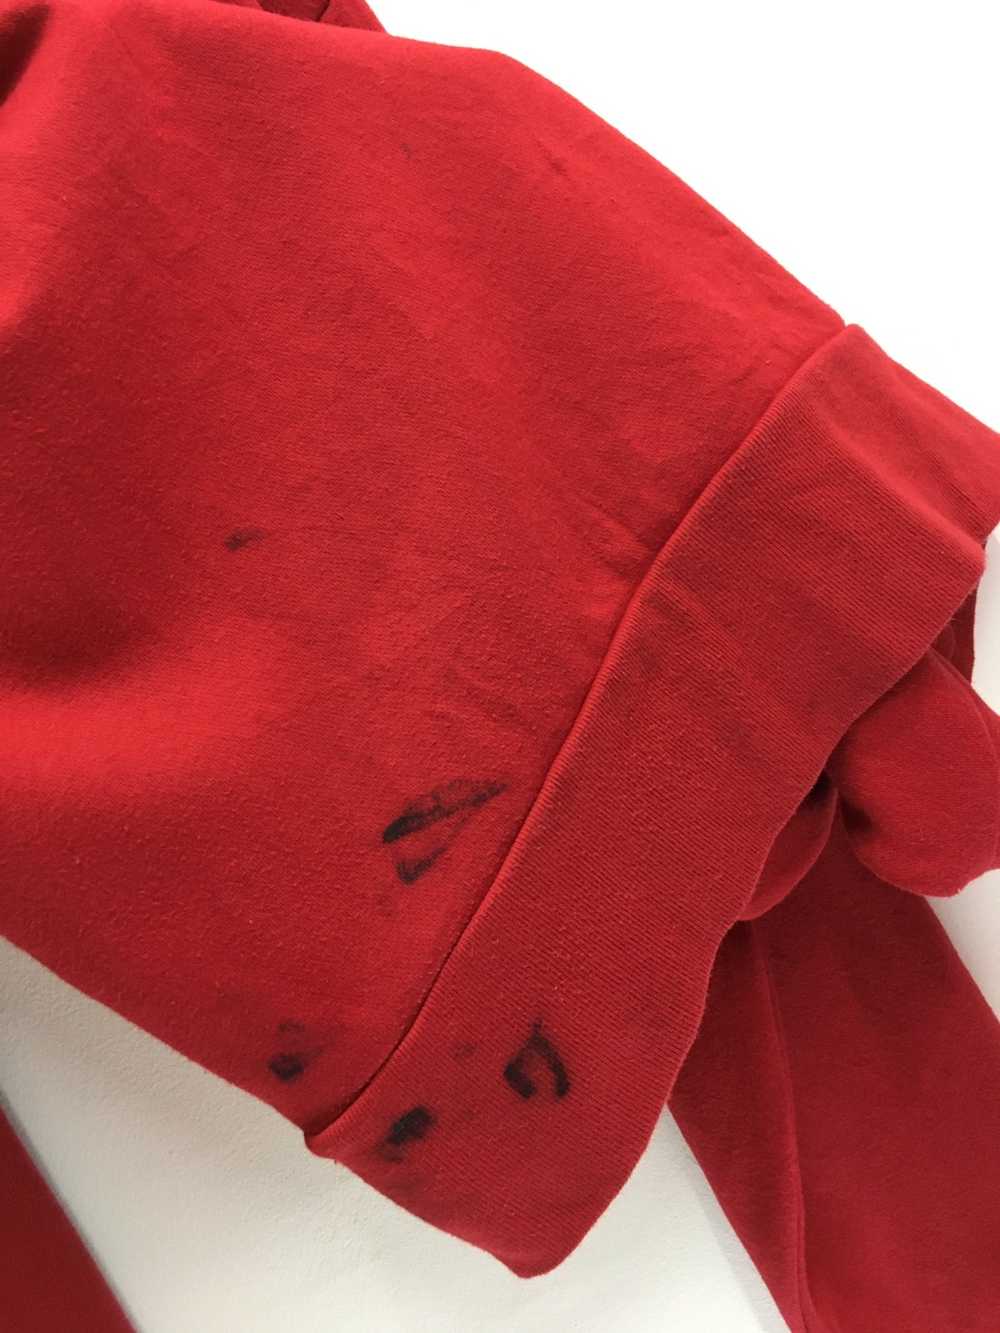 Japanese Brand GAP Sweatshirt Distressed - image 8